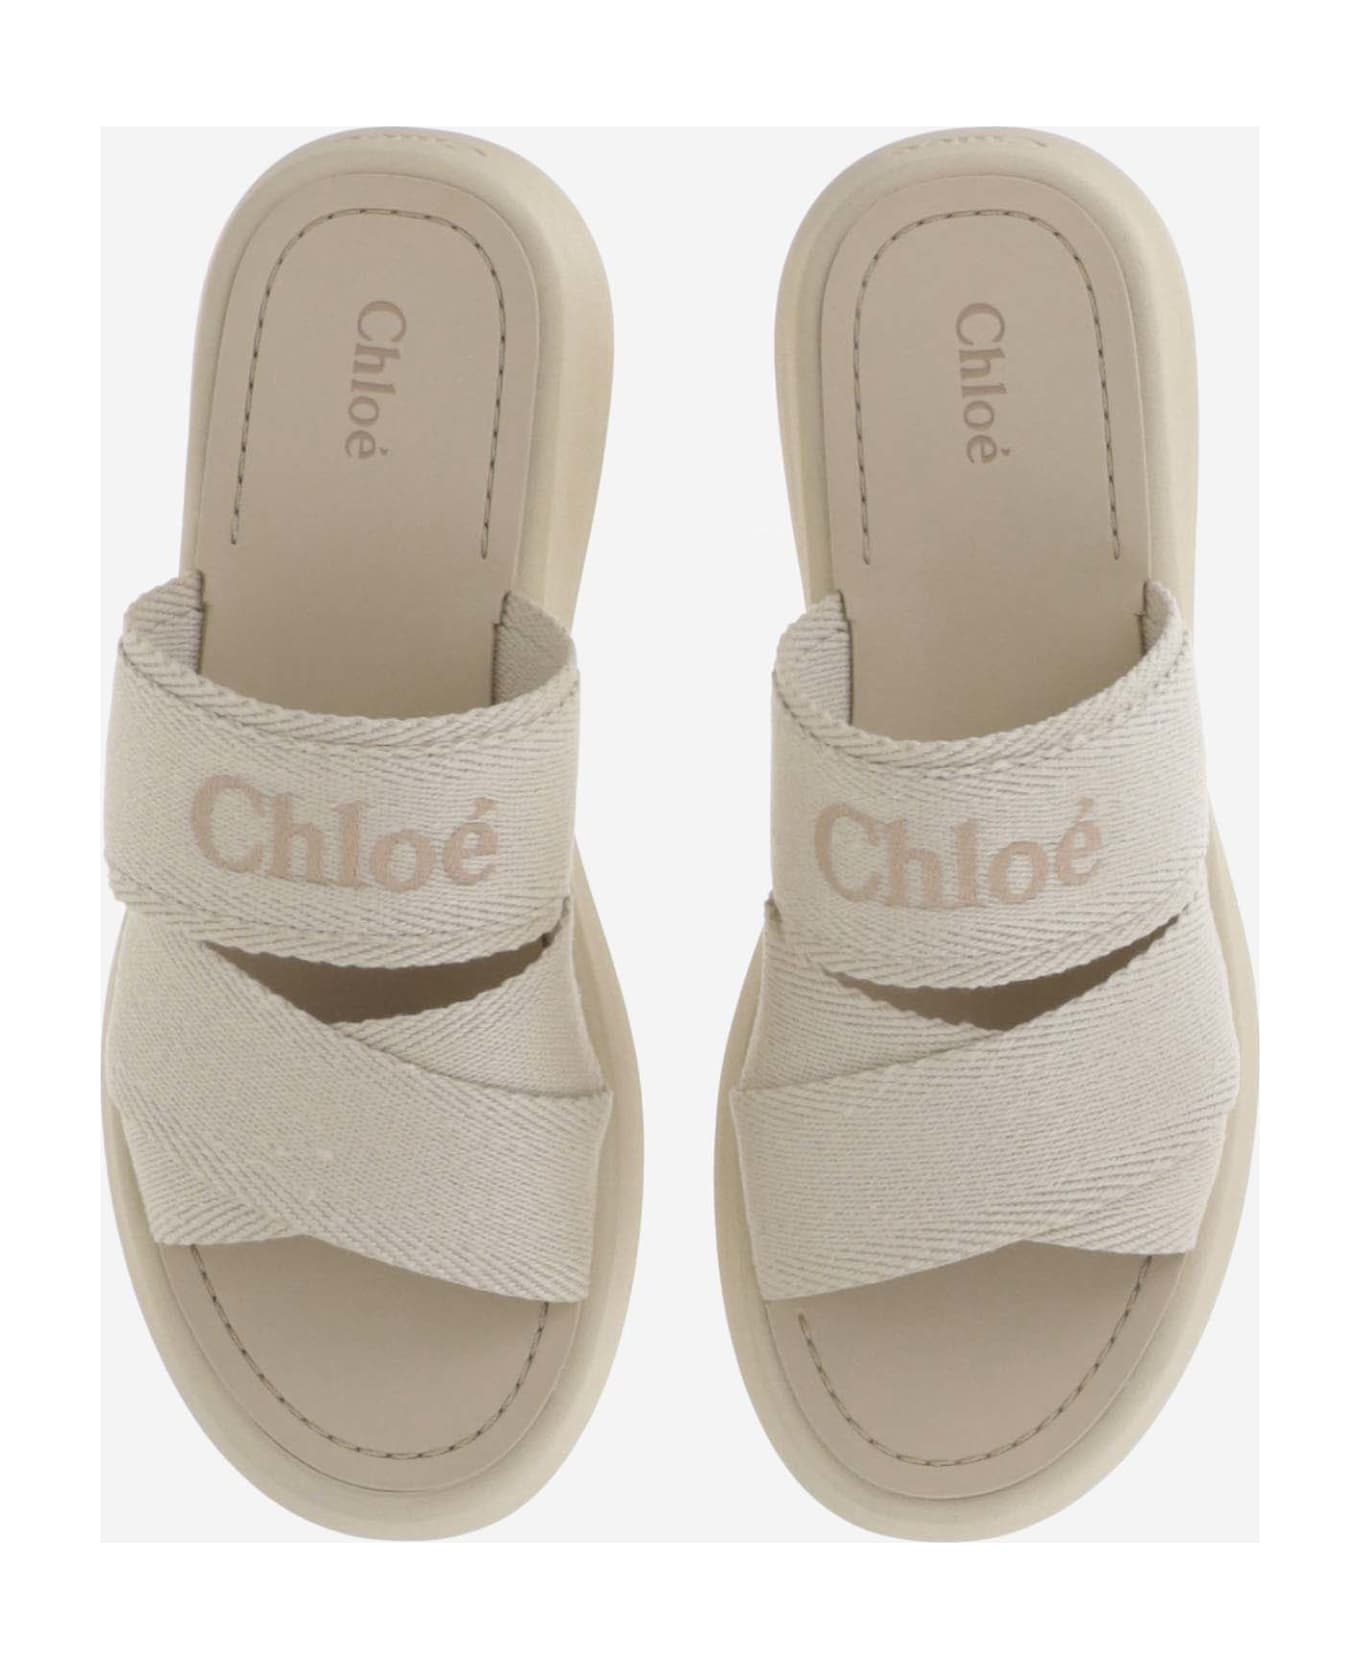 Chloé Canvas Sandals With Logo - Pearl beige サンダル